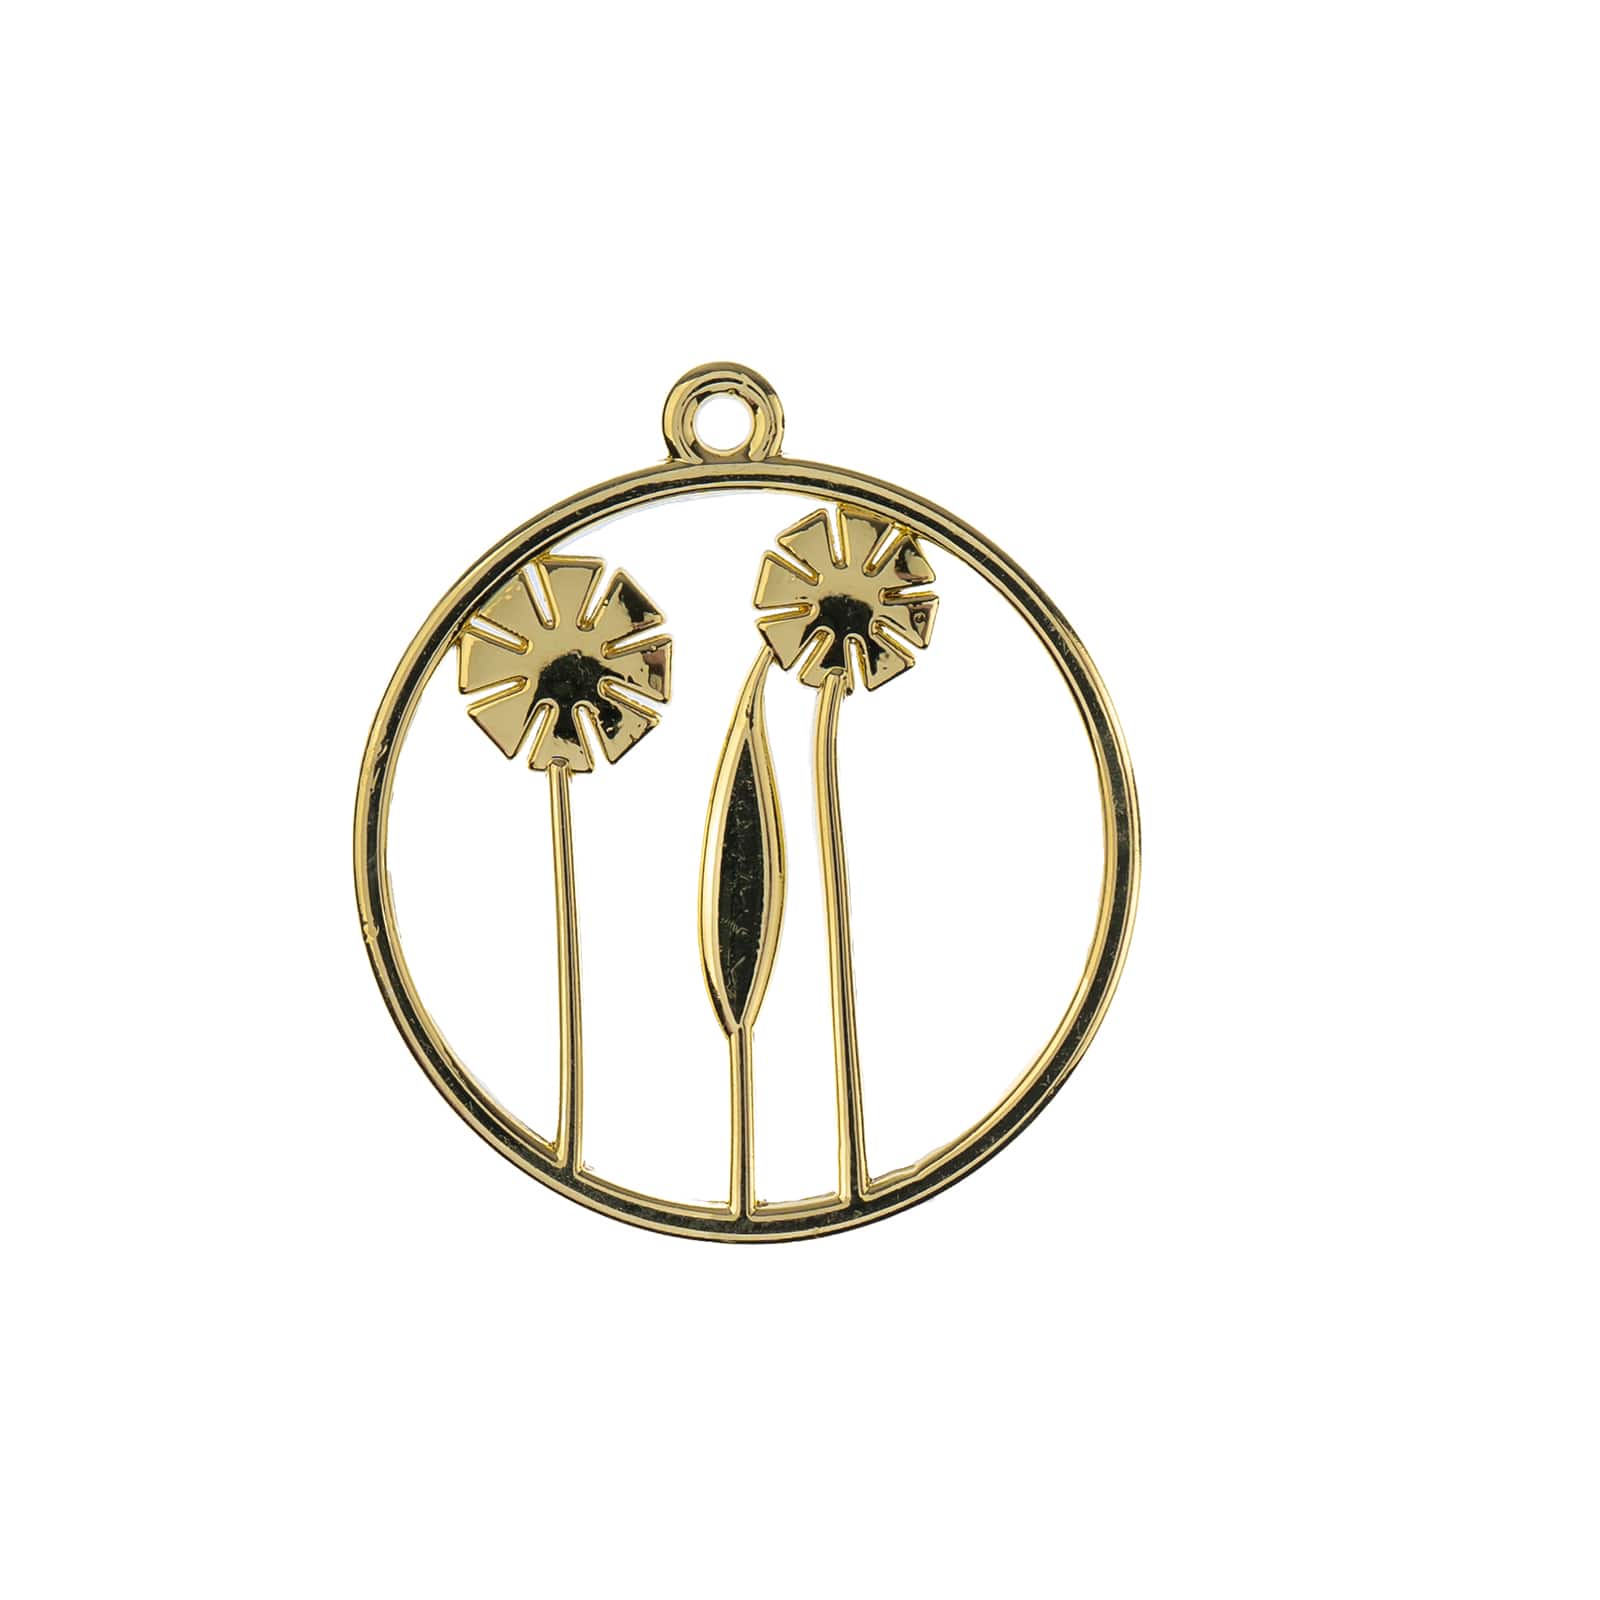 John Bead 25mm Gold Circle with Flowers Beadwork Pendants, 4ct.